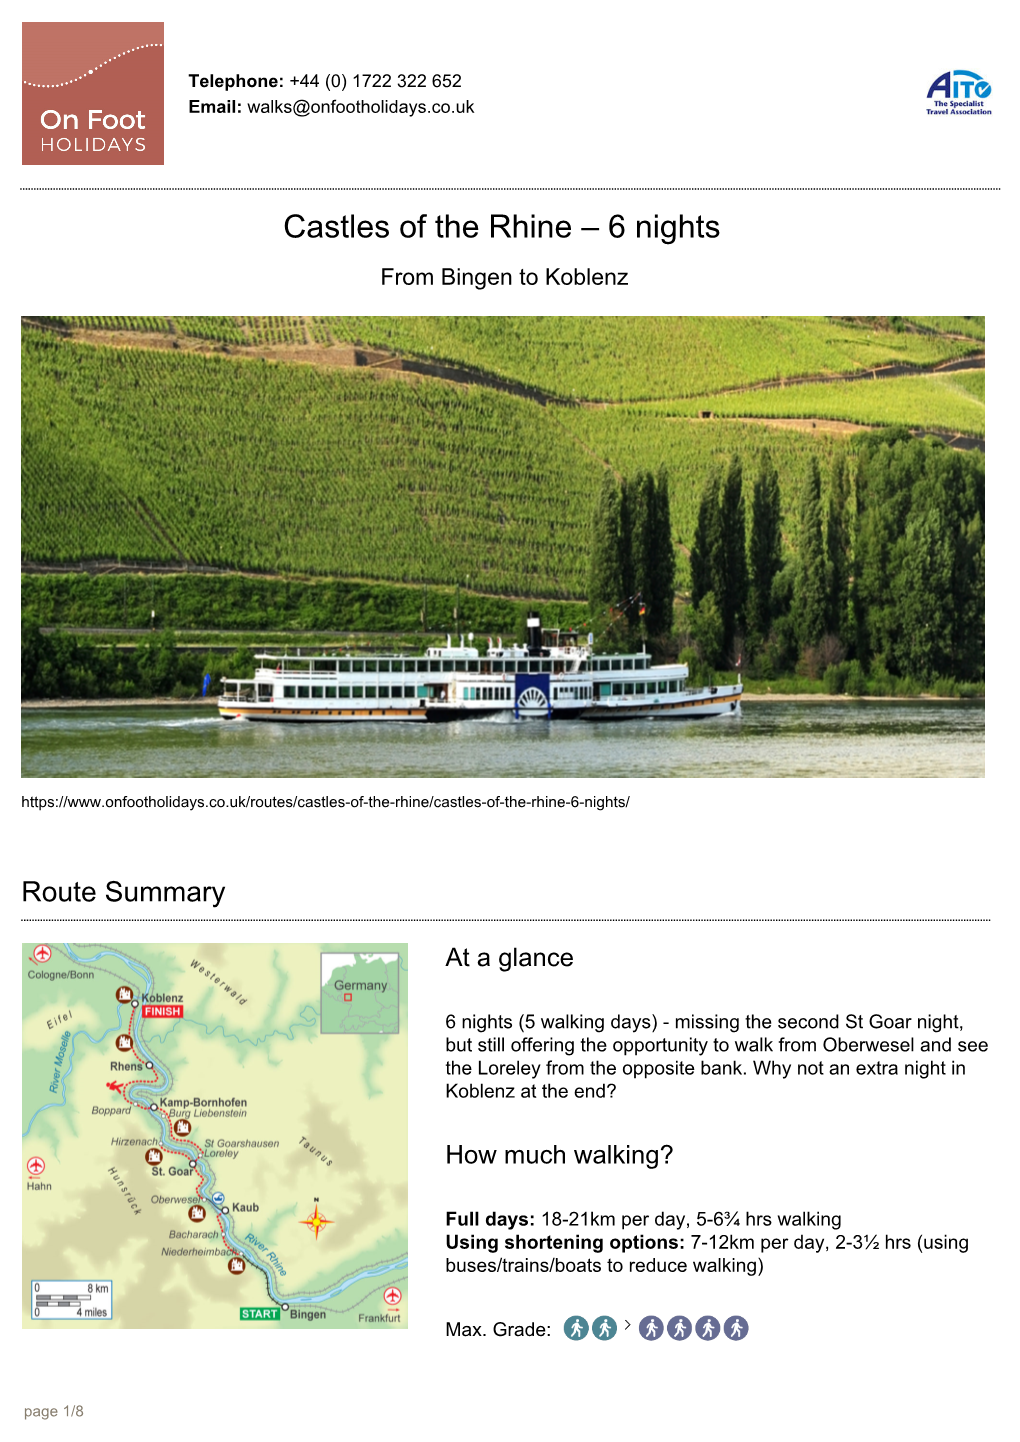 Castles of the Rhine – 6 Nights from Bingen to Koblenz